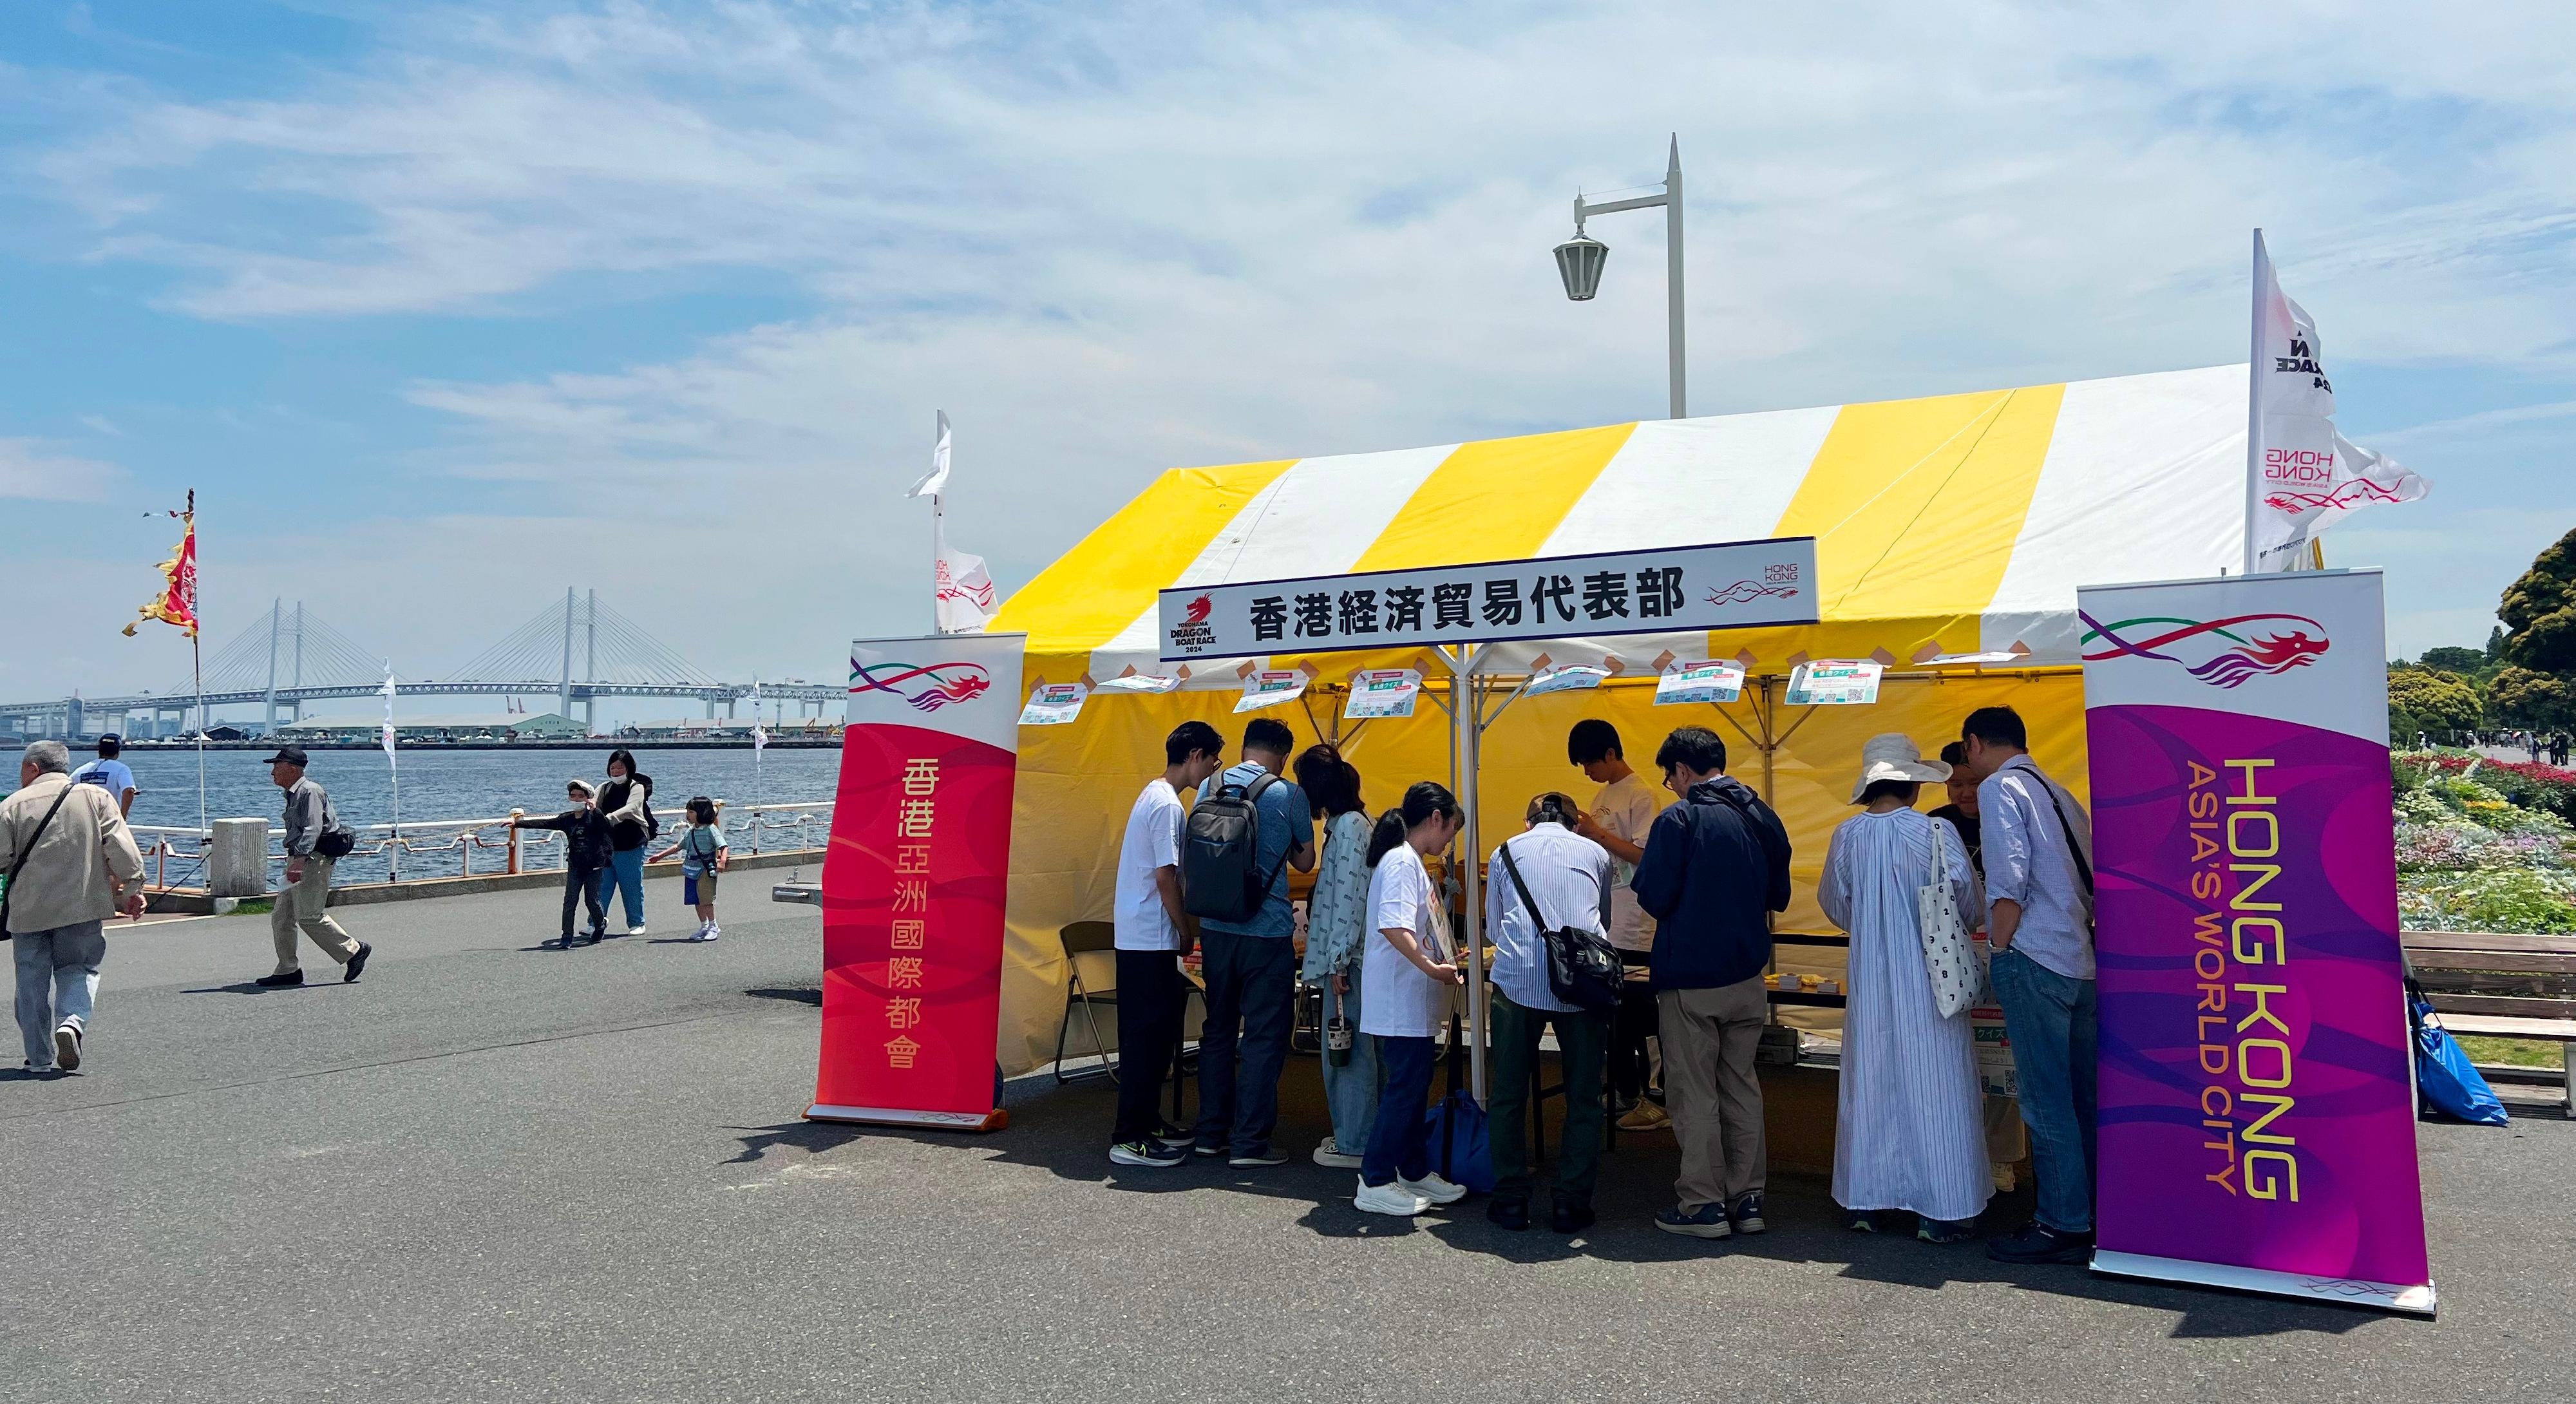 The Hong Kong Cup dragon boat race was held at the promenade of Yamashita Park in Yokohama, Japan, today (June 2). Photo shows park visitors at the booth set up by the Hong Kong Economic and Trade Office in Tokyo.